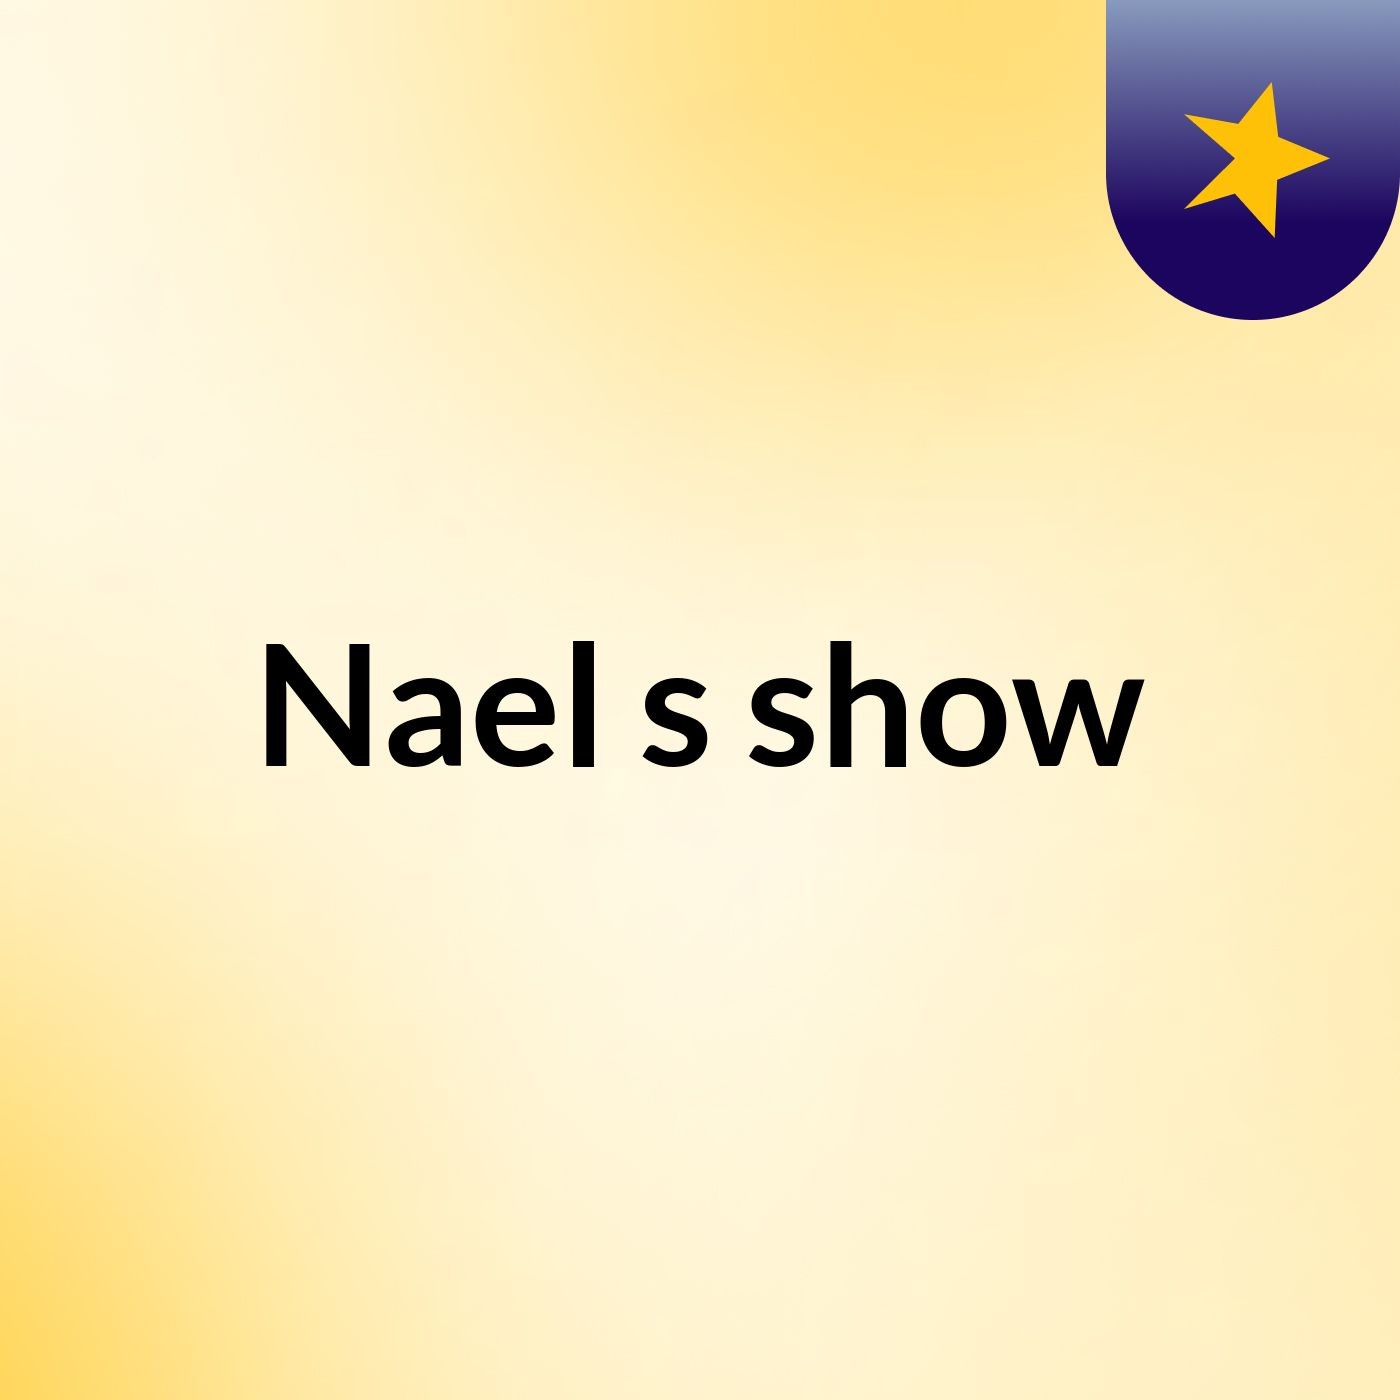 Nael's show